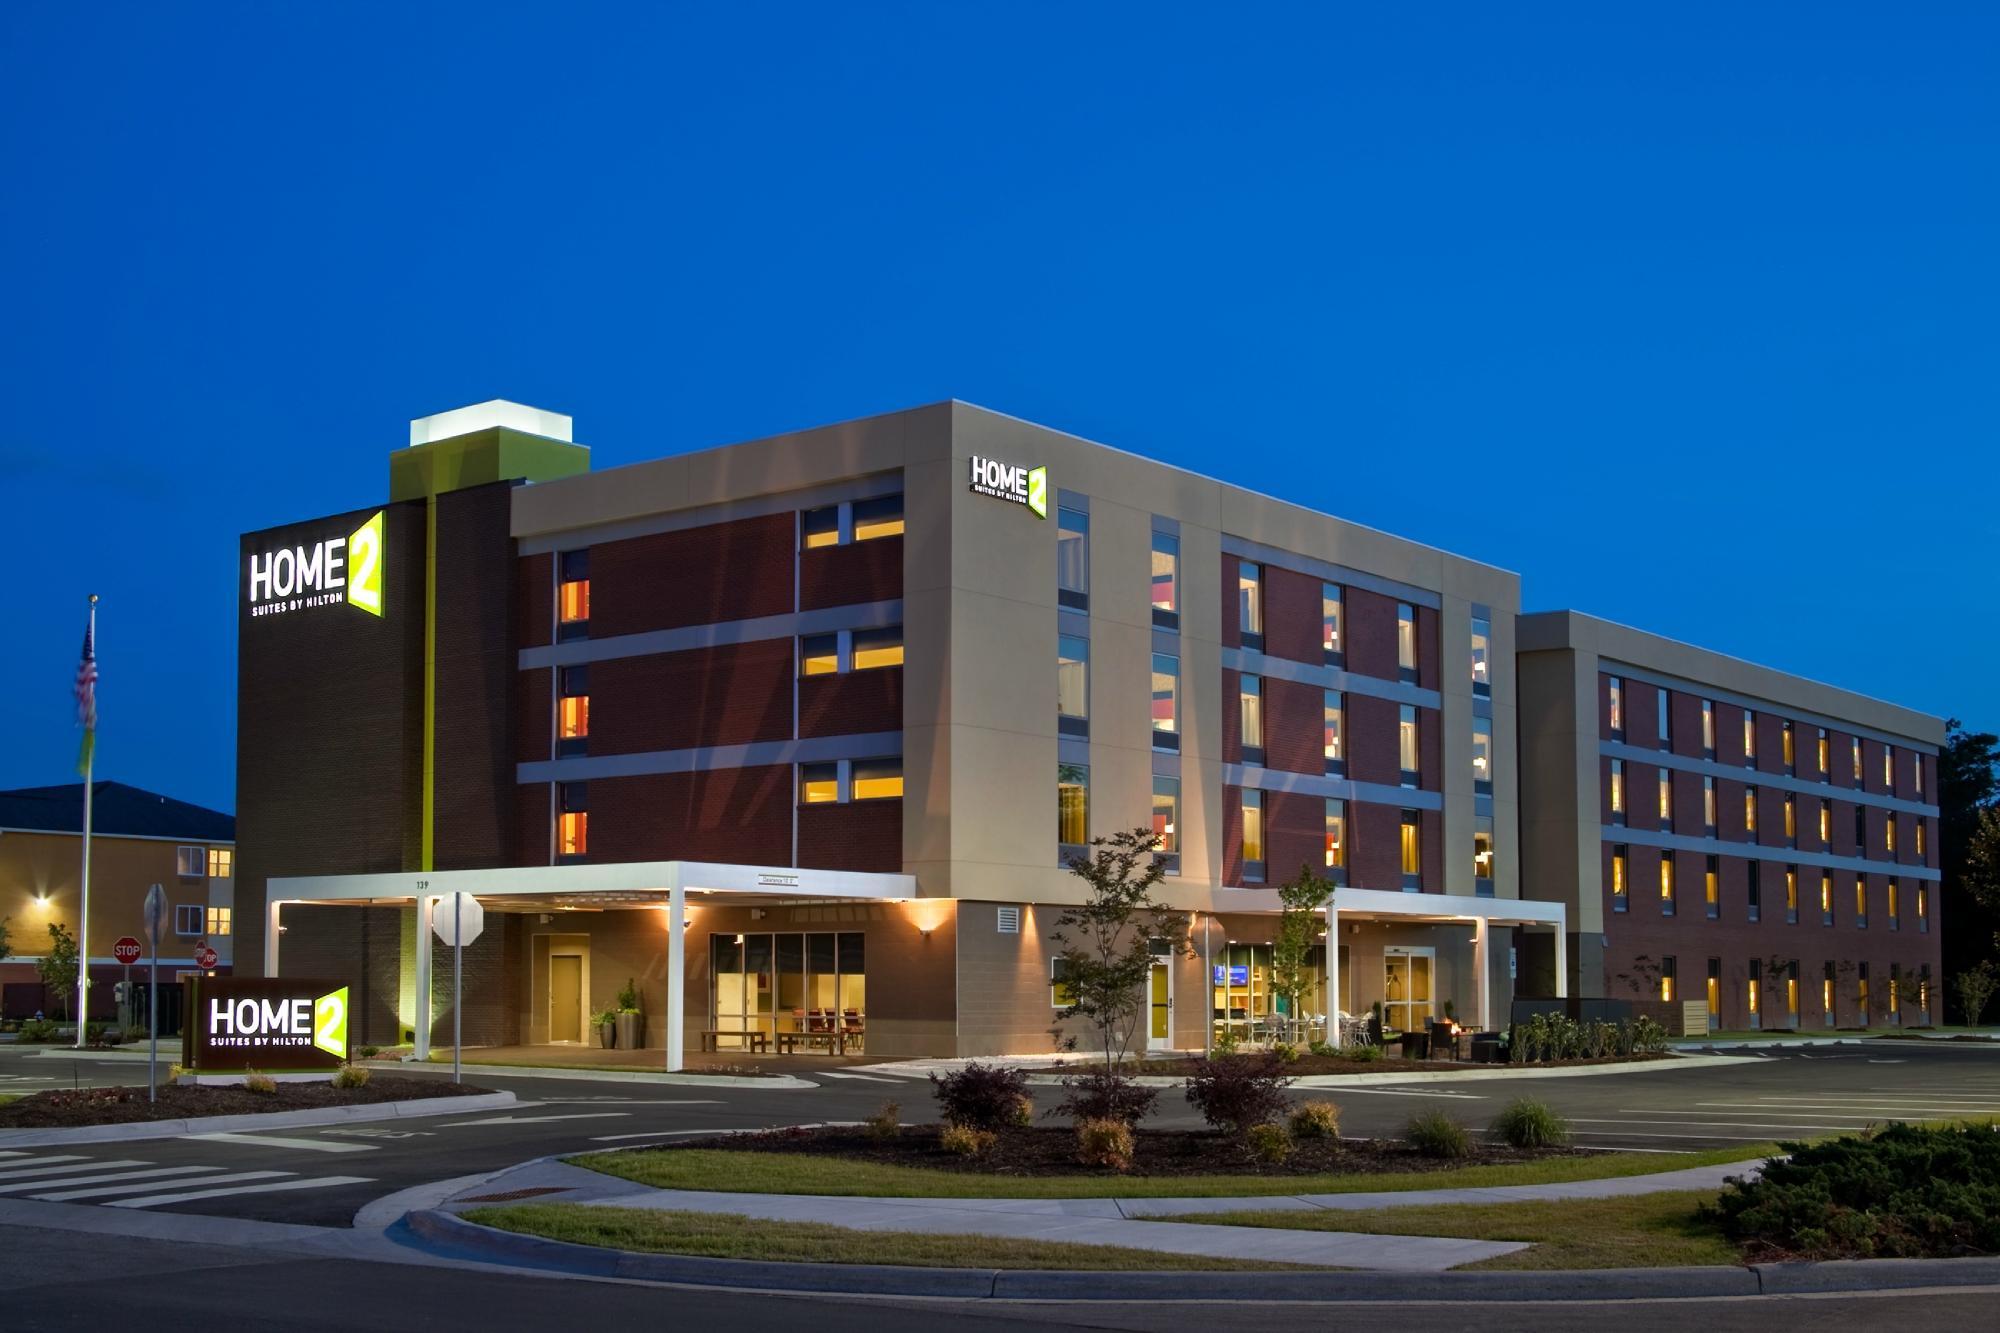 Photo of Home2 Suites by Hilton Jacksonville (NC), Jacksonville, NC